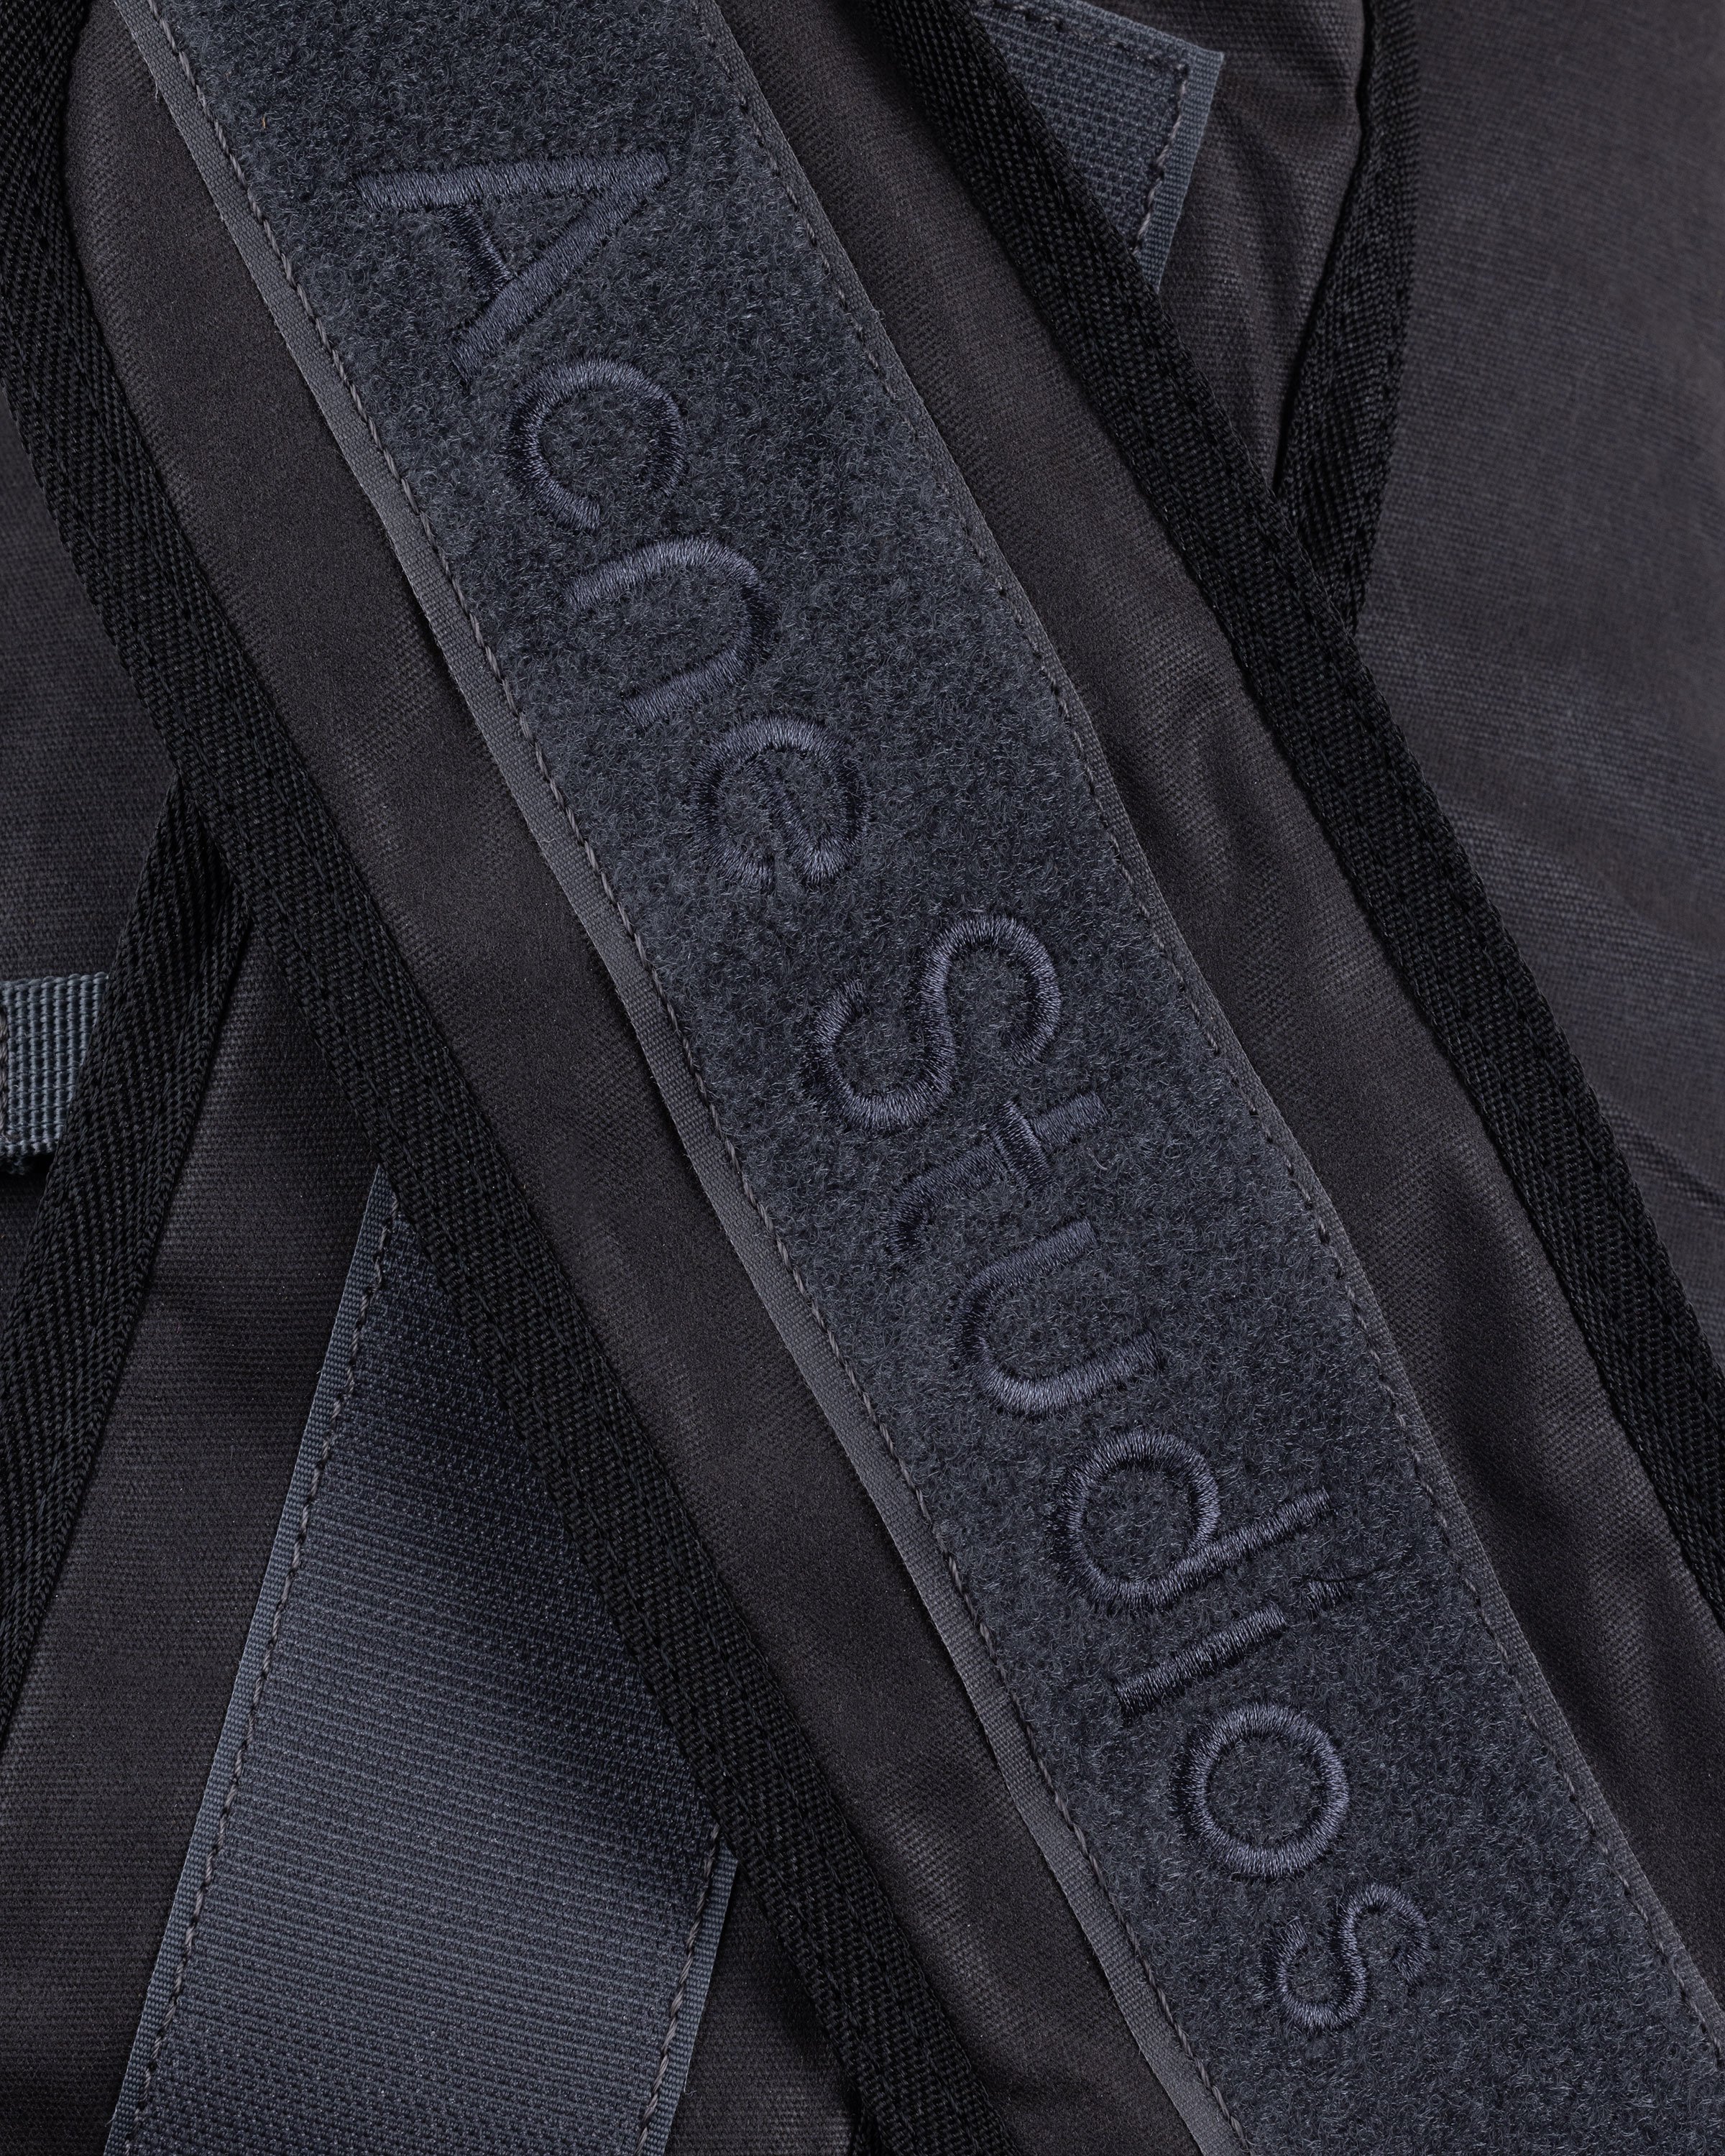 Acne Studios - Sling Backpack Grey/Black - Accessories - Multi - Image 3